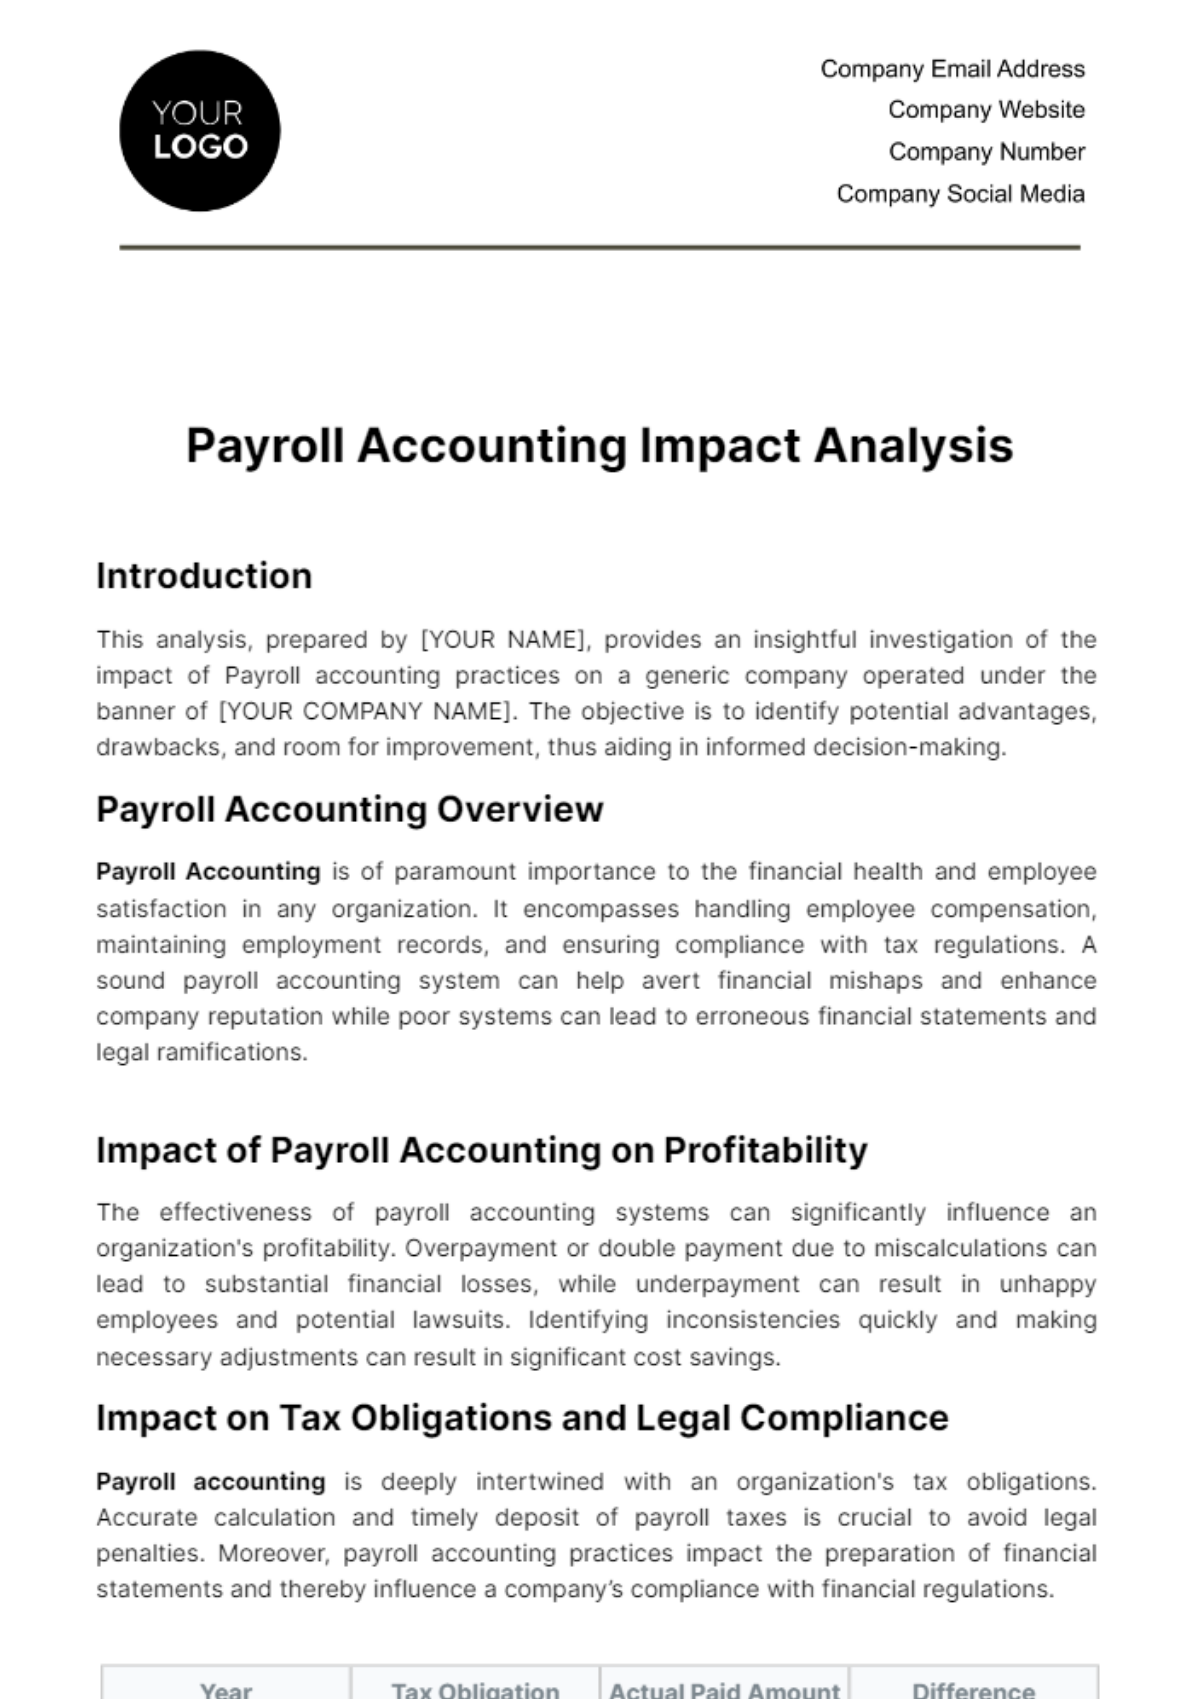 Free Payroll Accounting Impact Analysis Template